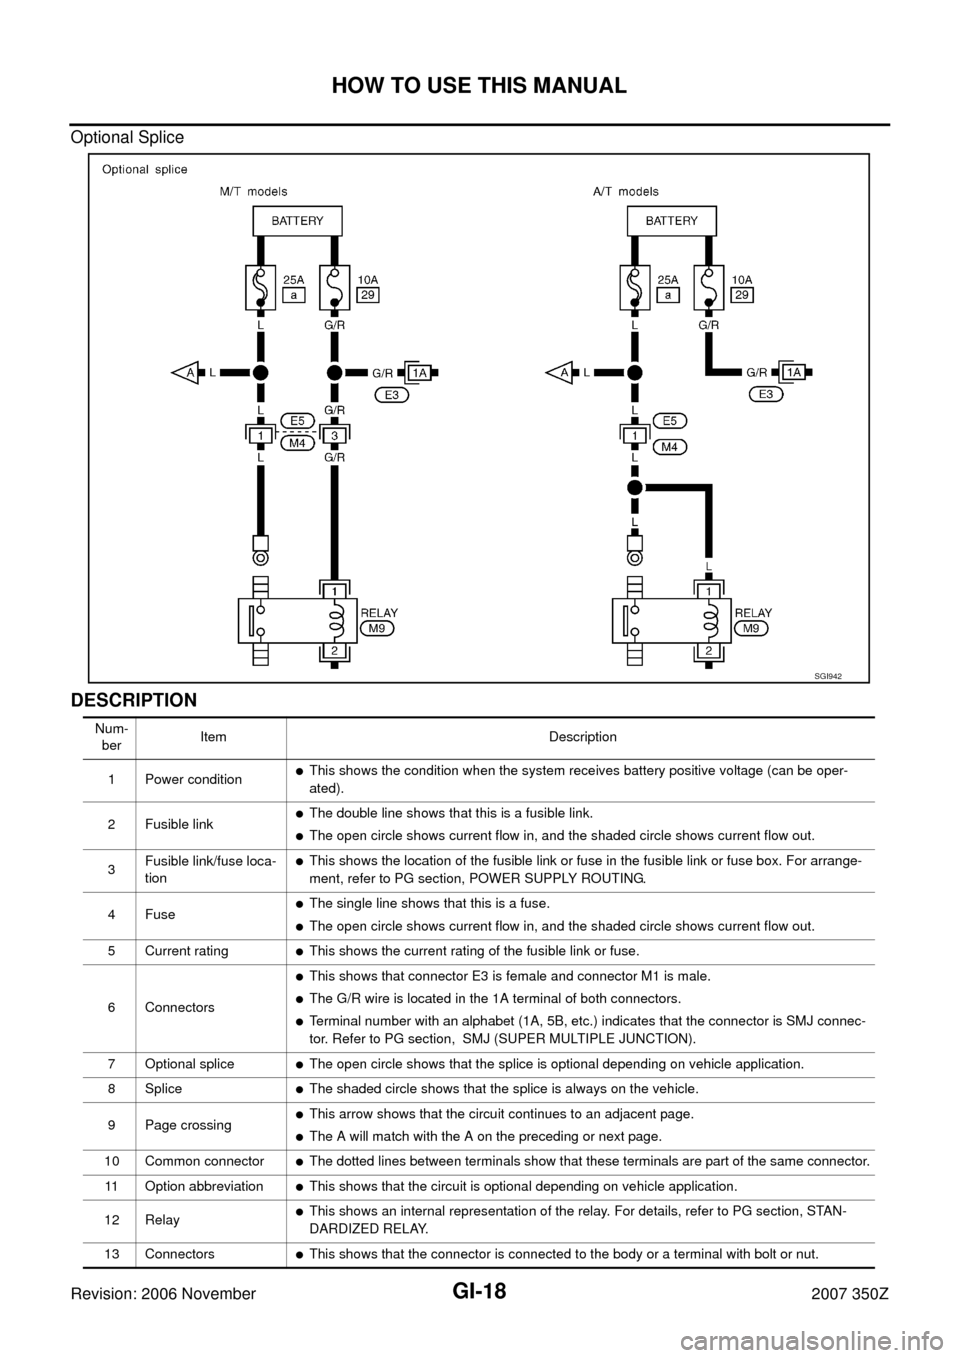 NISSAN 350Z 2007 Z33 General Information Workshop Manual GI-18
HOW TO USE THIS MANUAL
Revision: 2006 November2007 350Z
Optional Splice
DESCRIPTION 
SGI942
Num-
berItem Description
1 Power condition
This shows the condition when the system receives battery 